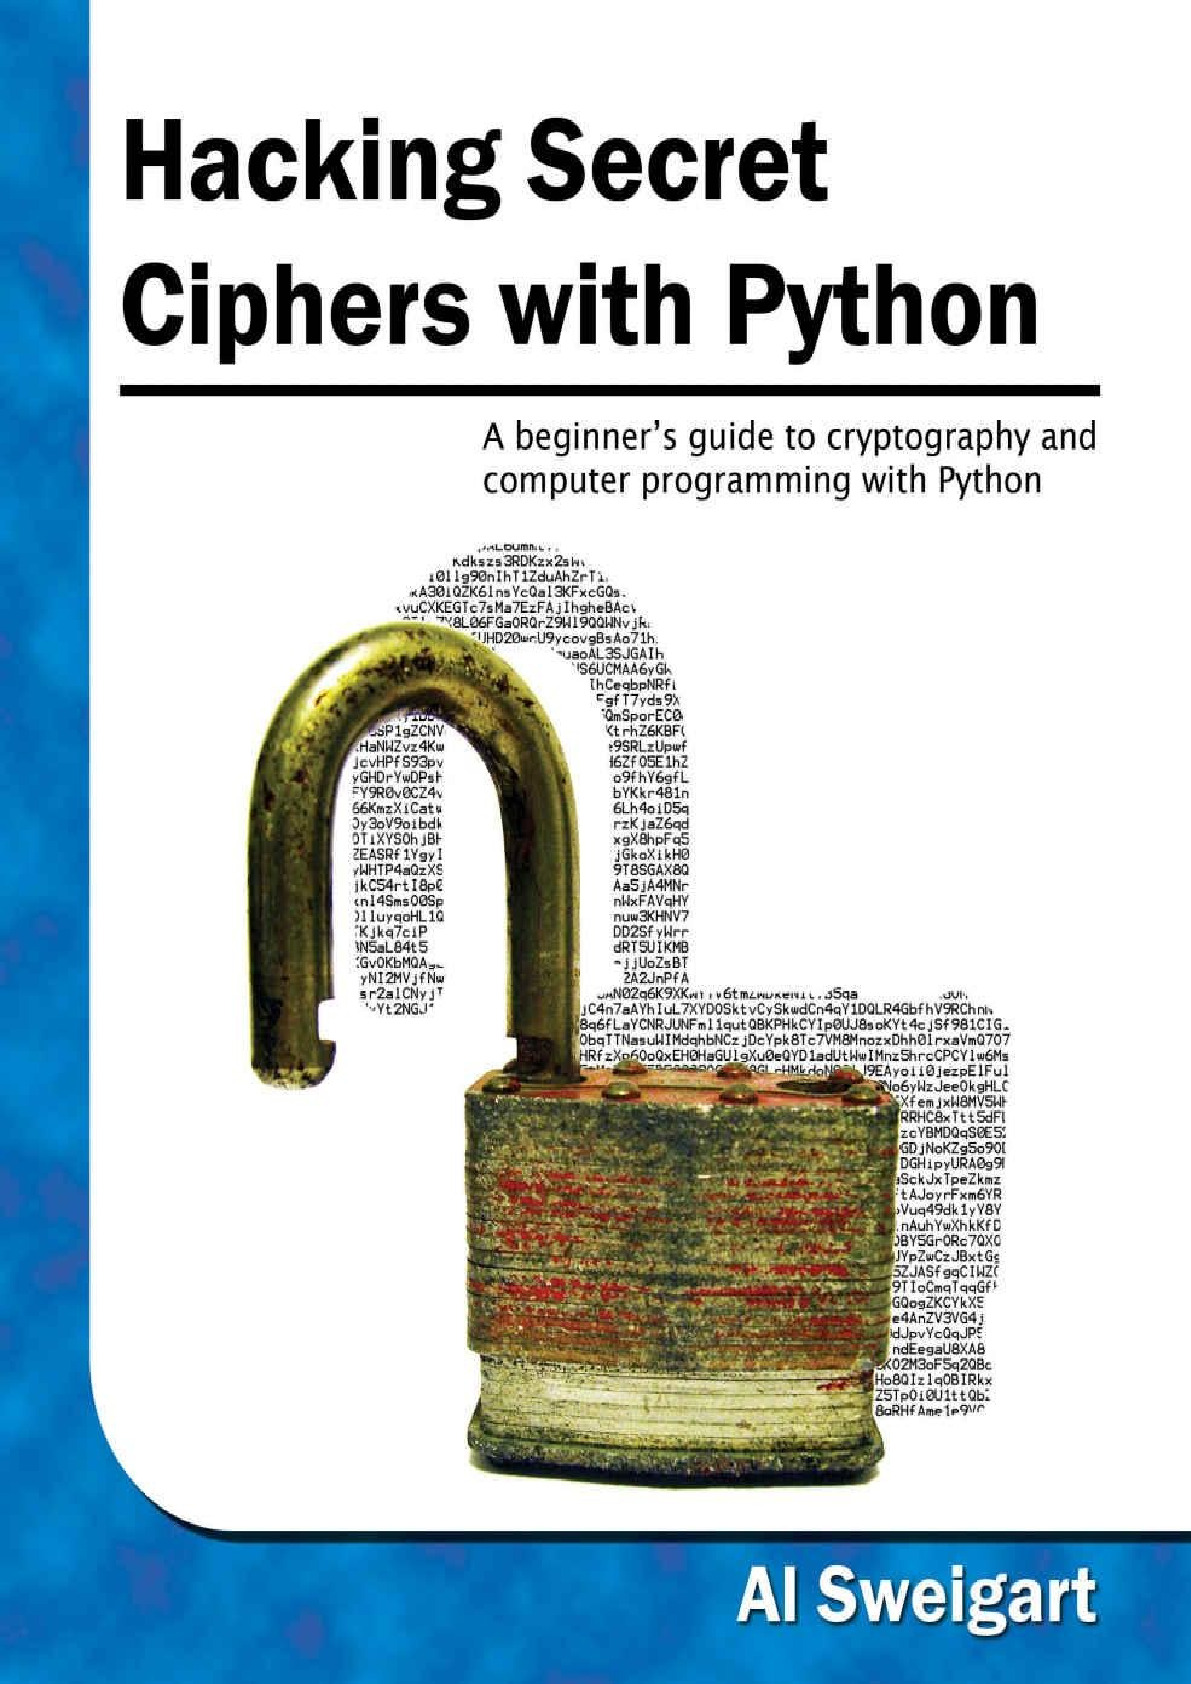 Hacking Secret Ciphers With Python (April 2015)